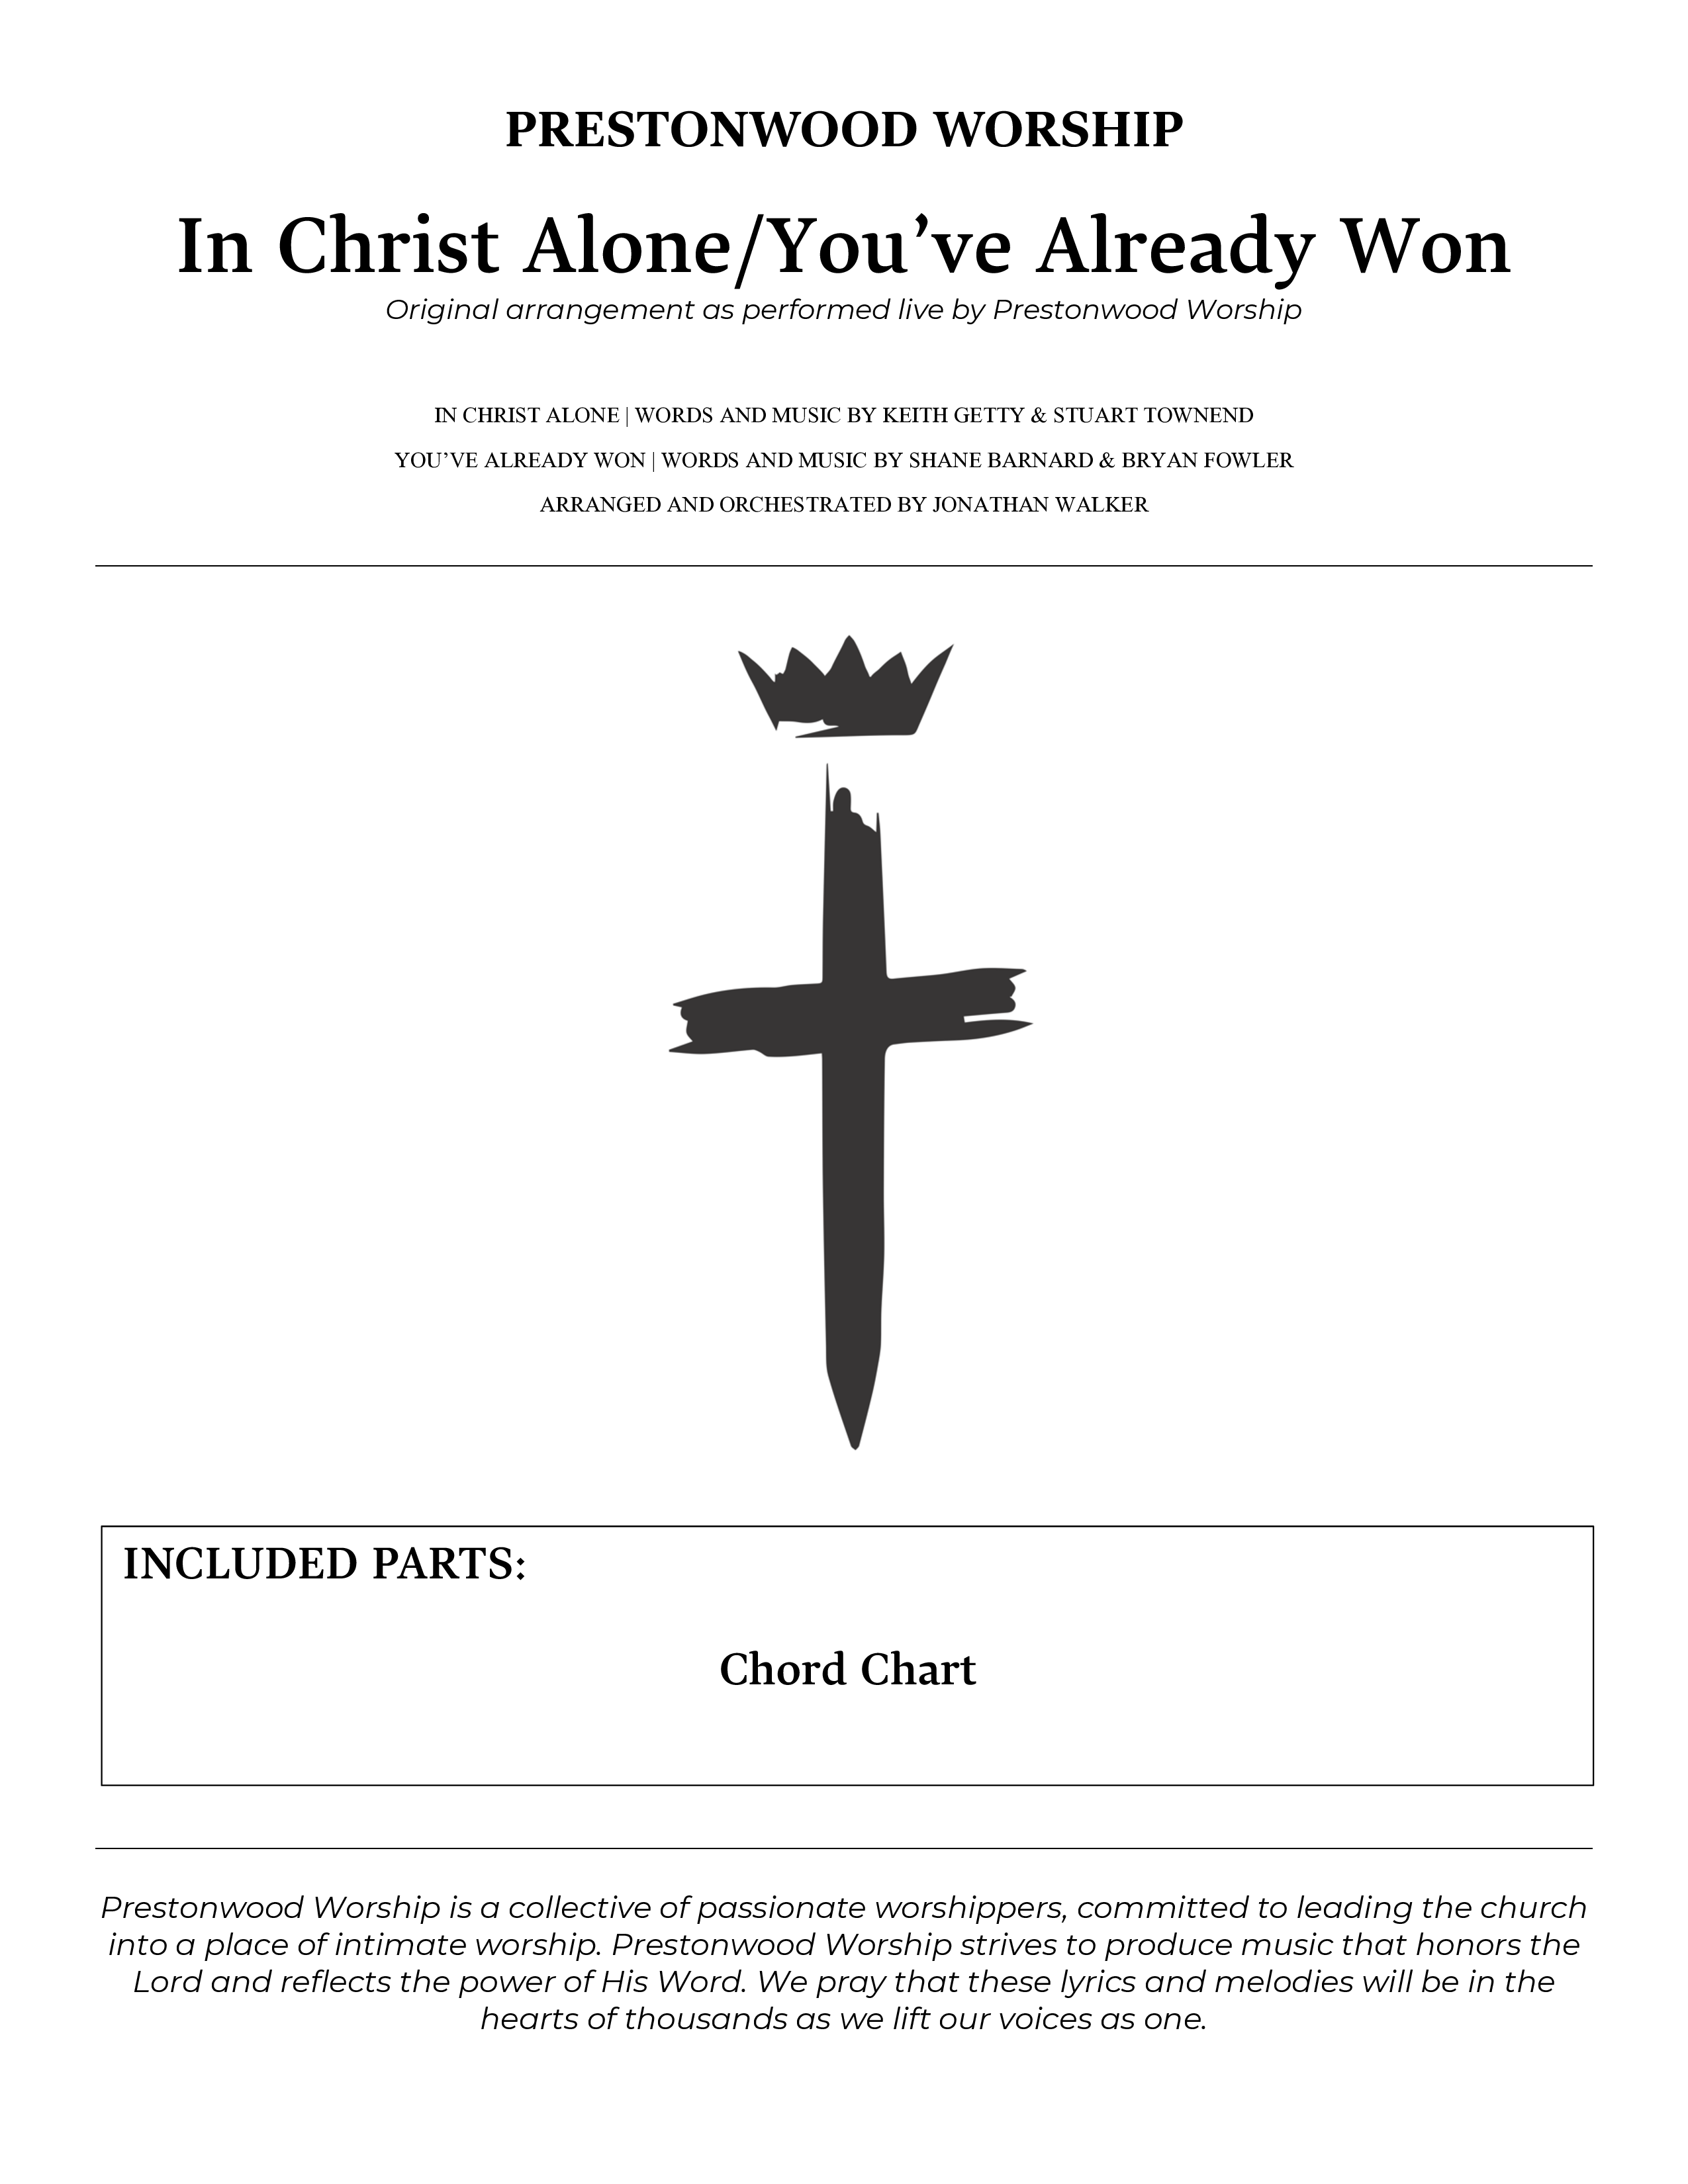 In Christ Alone with You've Already Won (Choral Anthem SATB) Chords & Lyrics (Prestonwood Choir / Prestonwood Worship / Arr. Jonathan Walker)